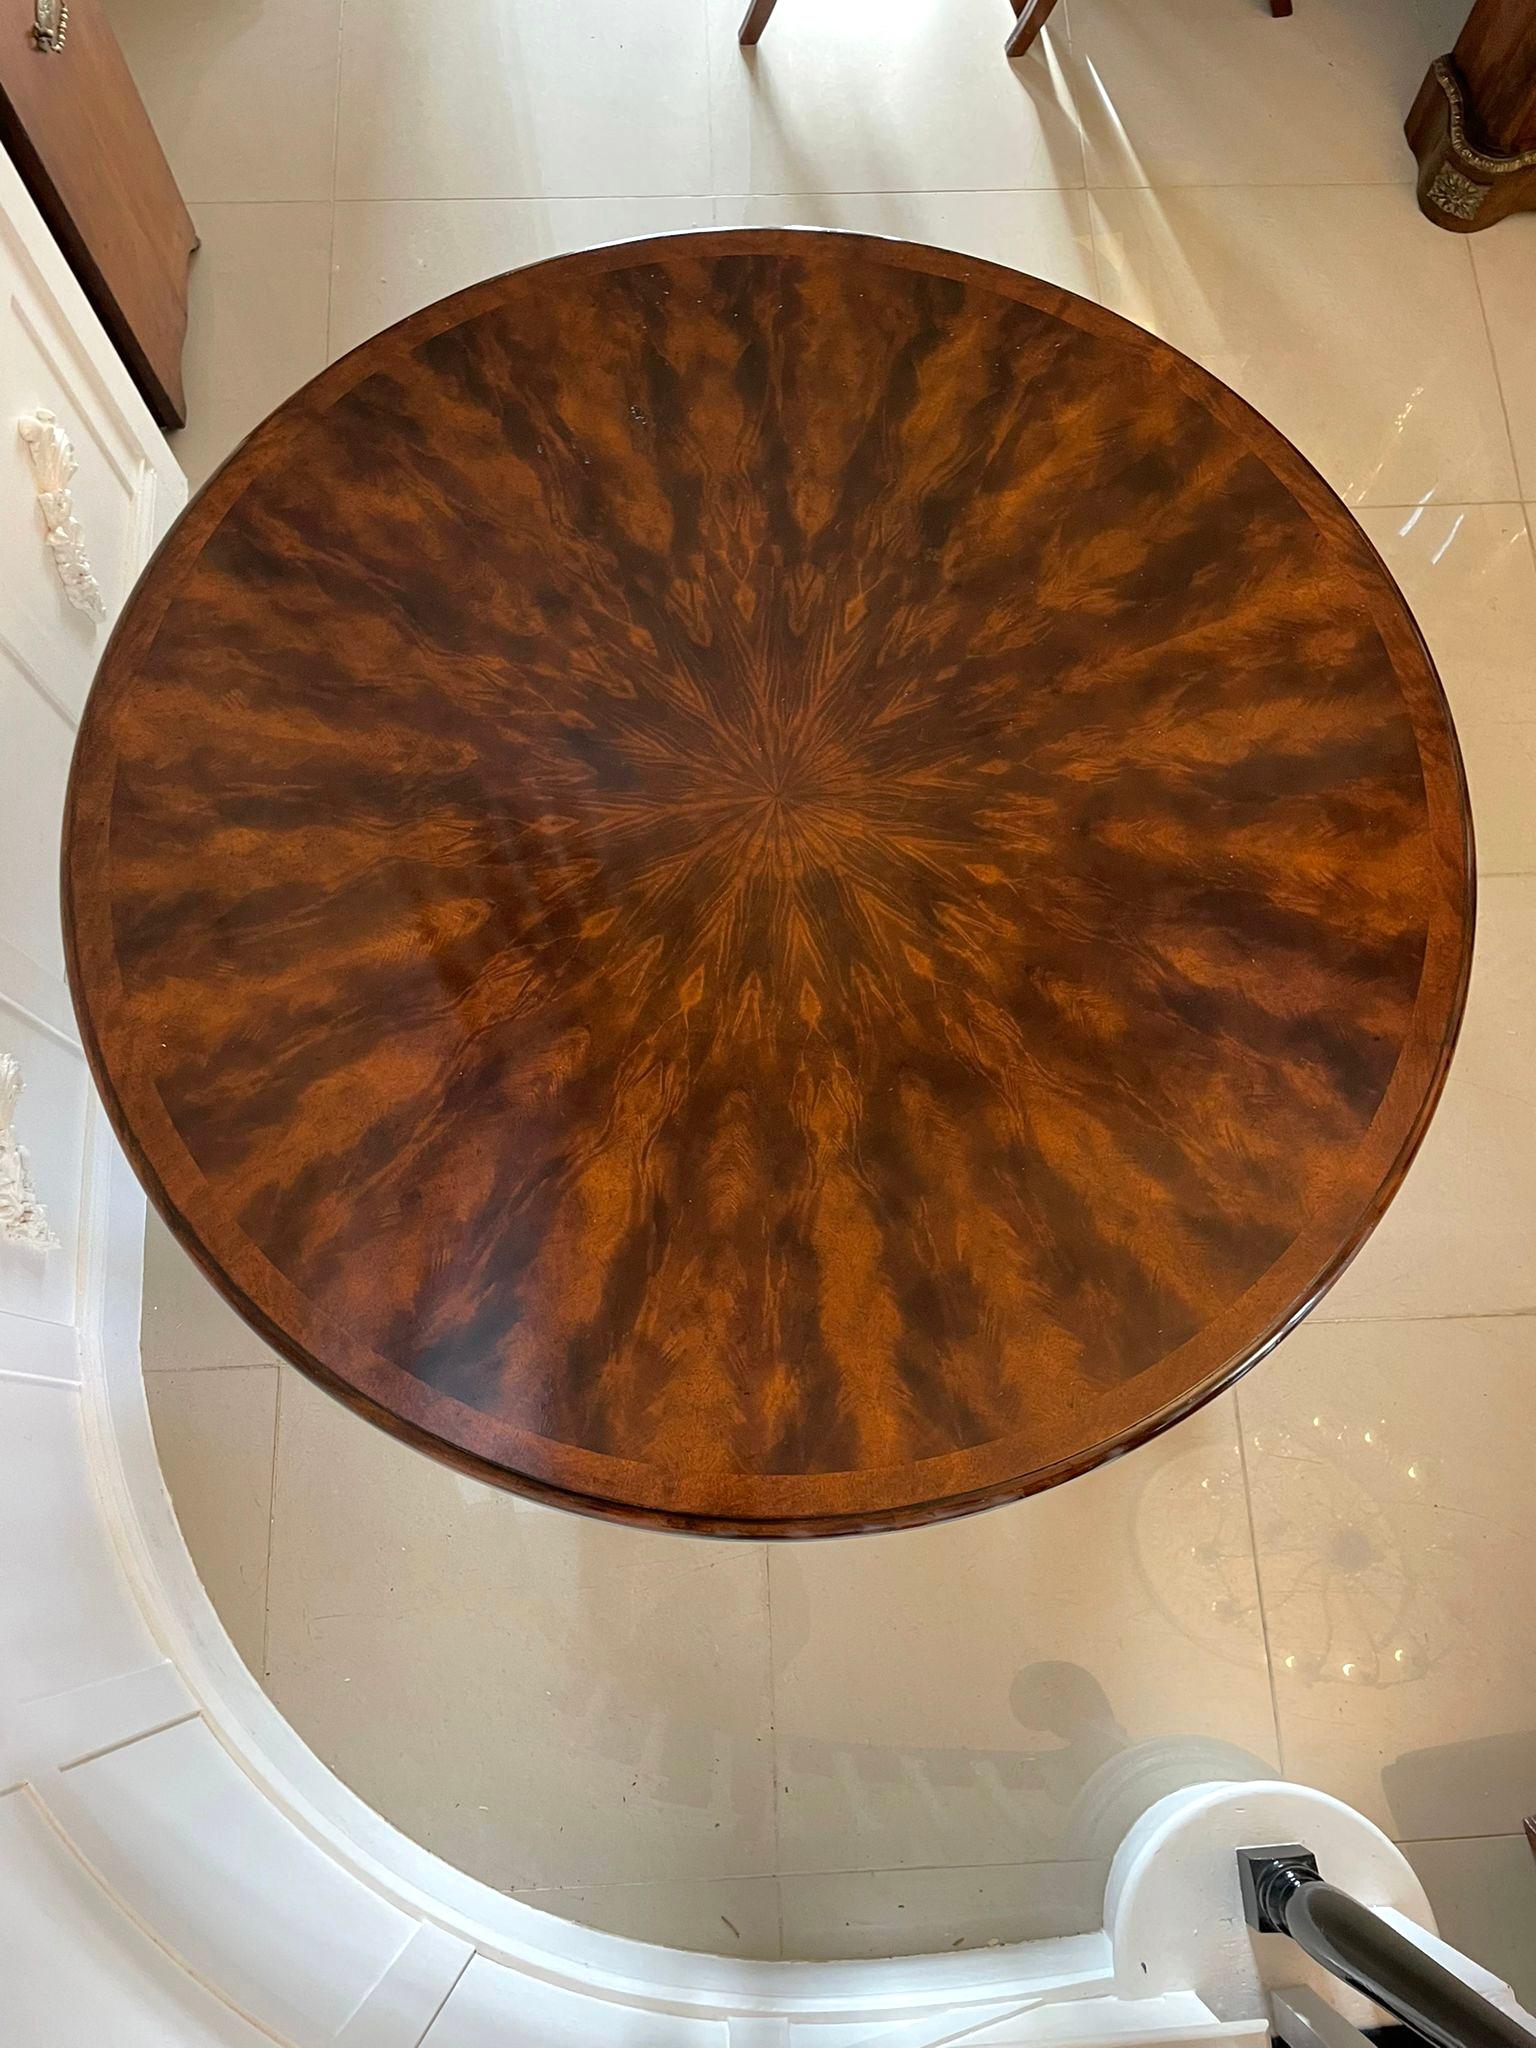 Superb Quality Figured Mahogany Circular Extending Dining Table 75 x 188 x 188cm 11